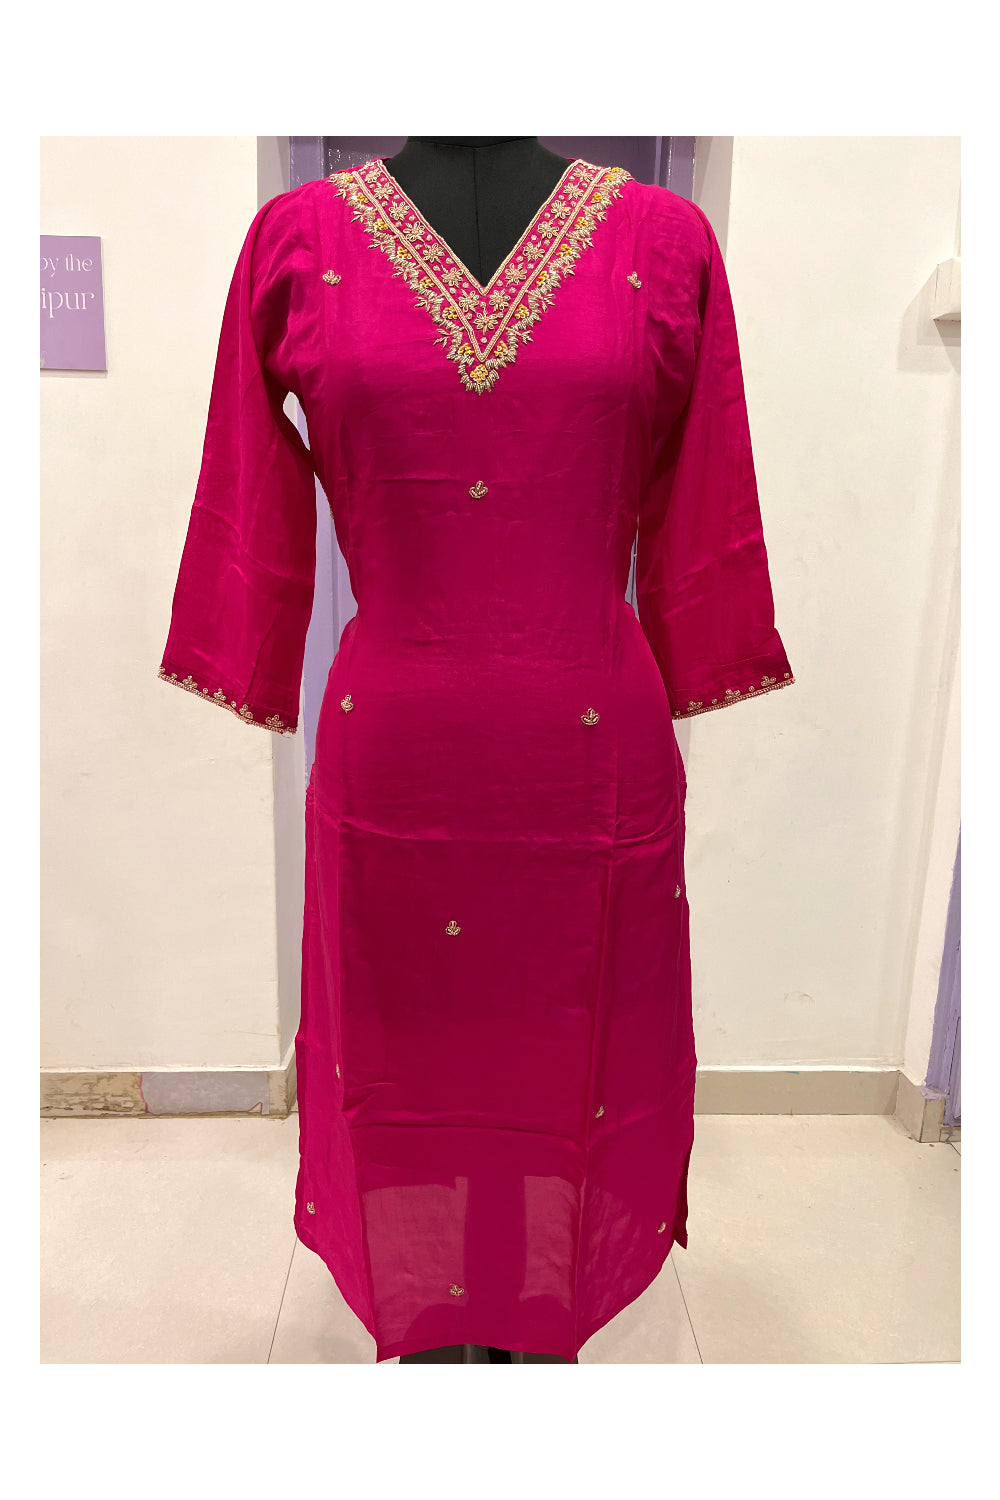 Southloom Stitched Semi Silk Salwar Set in Magenta and Butta Butta Works